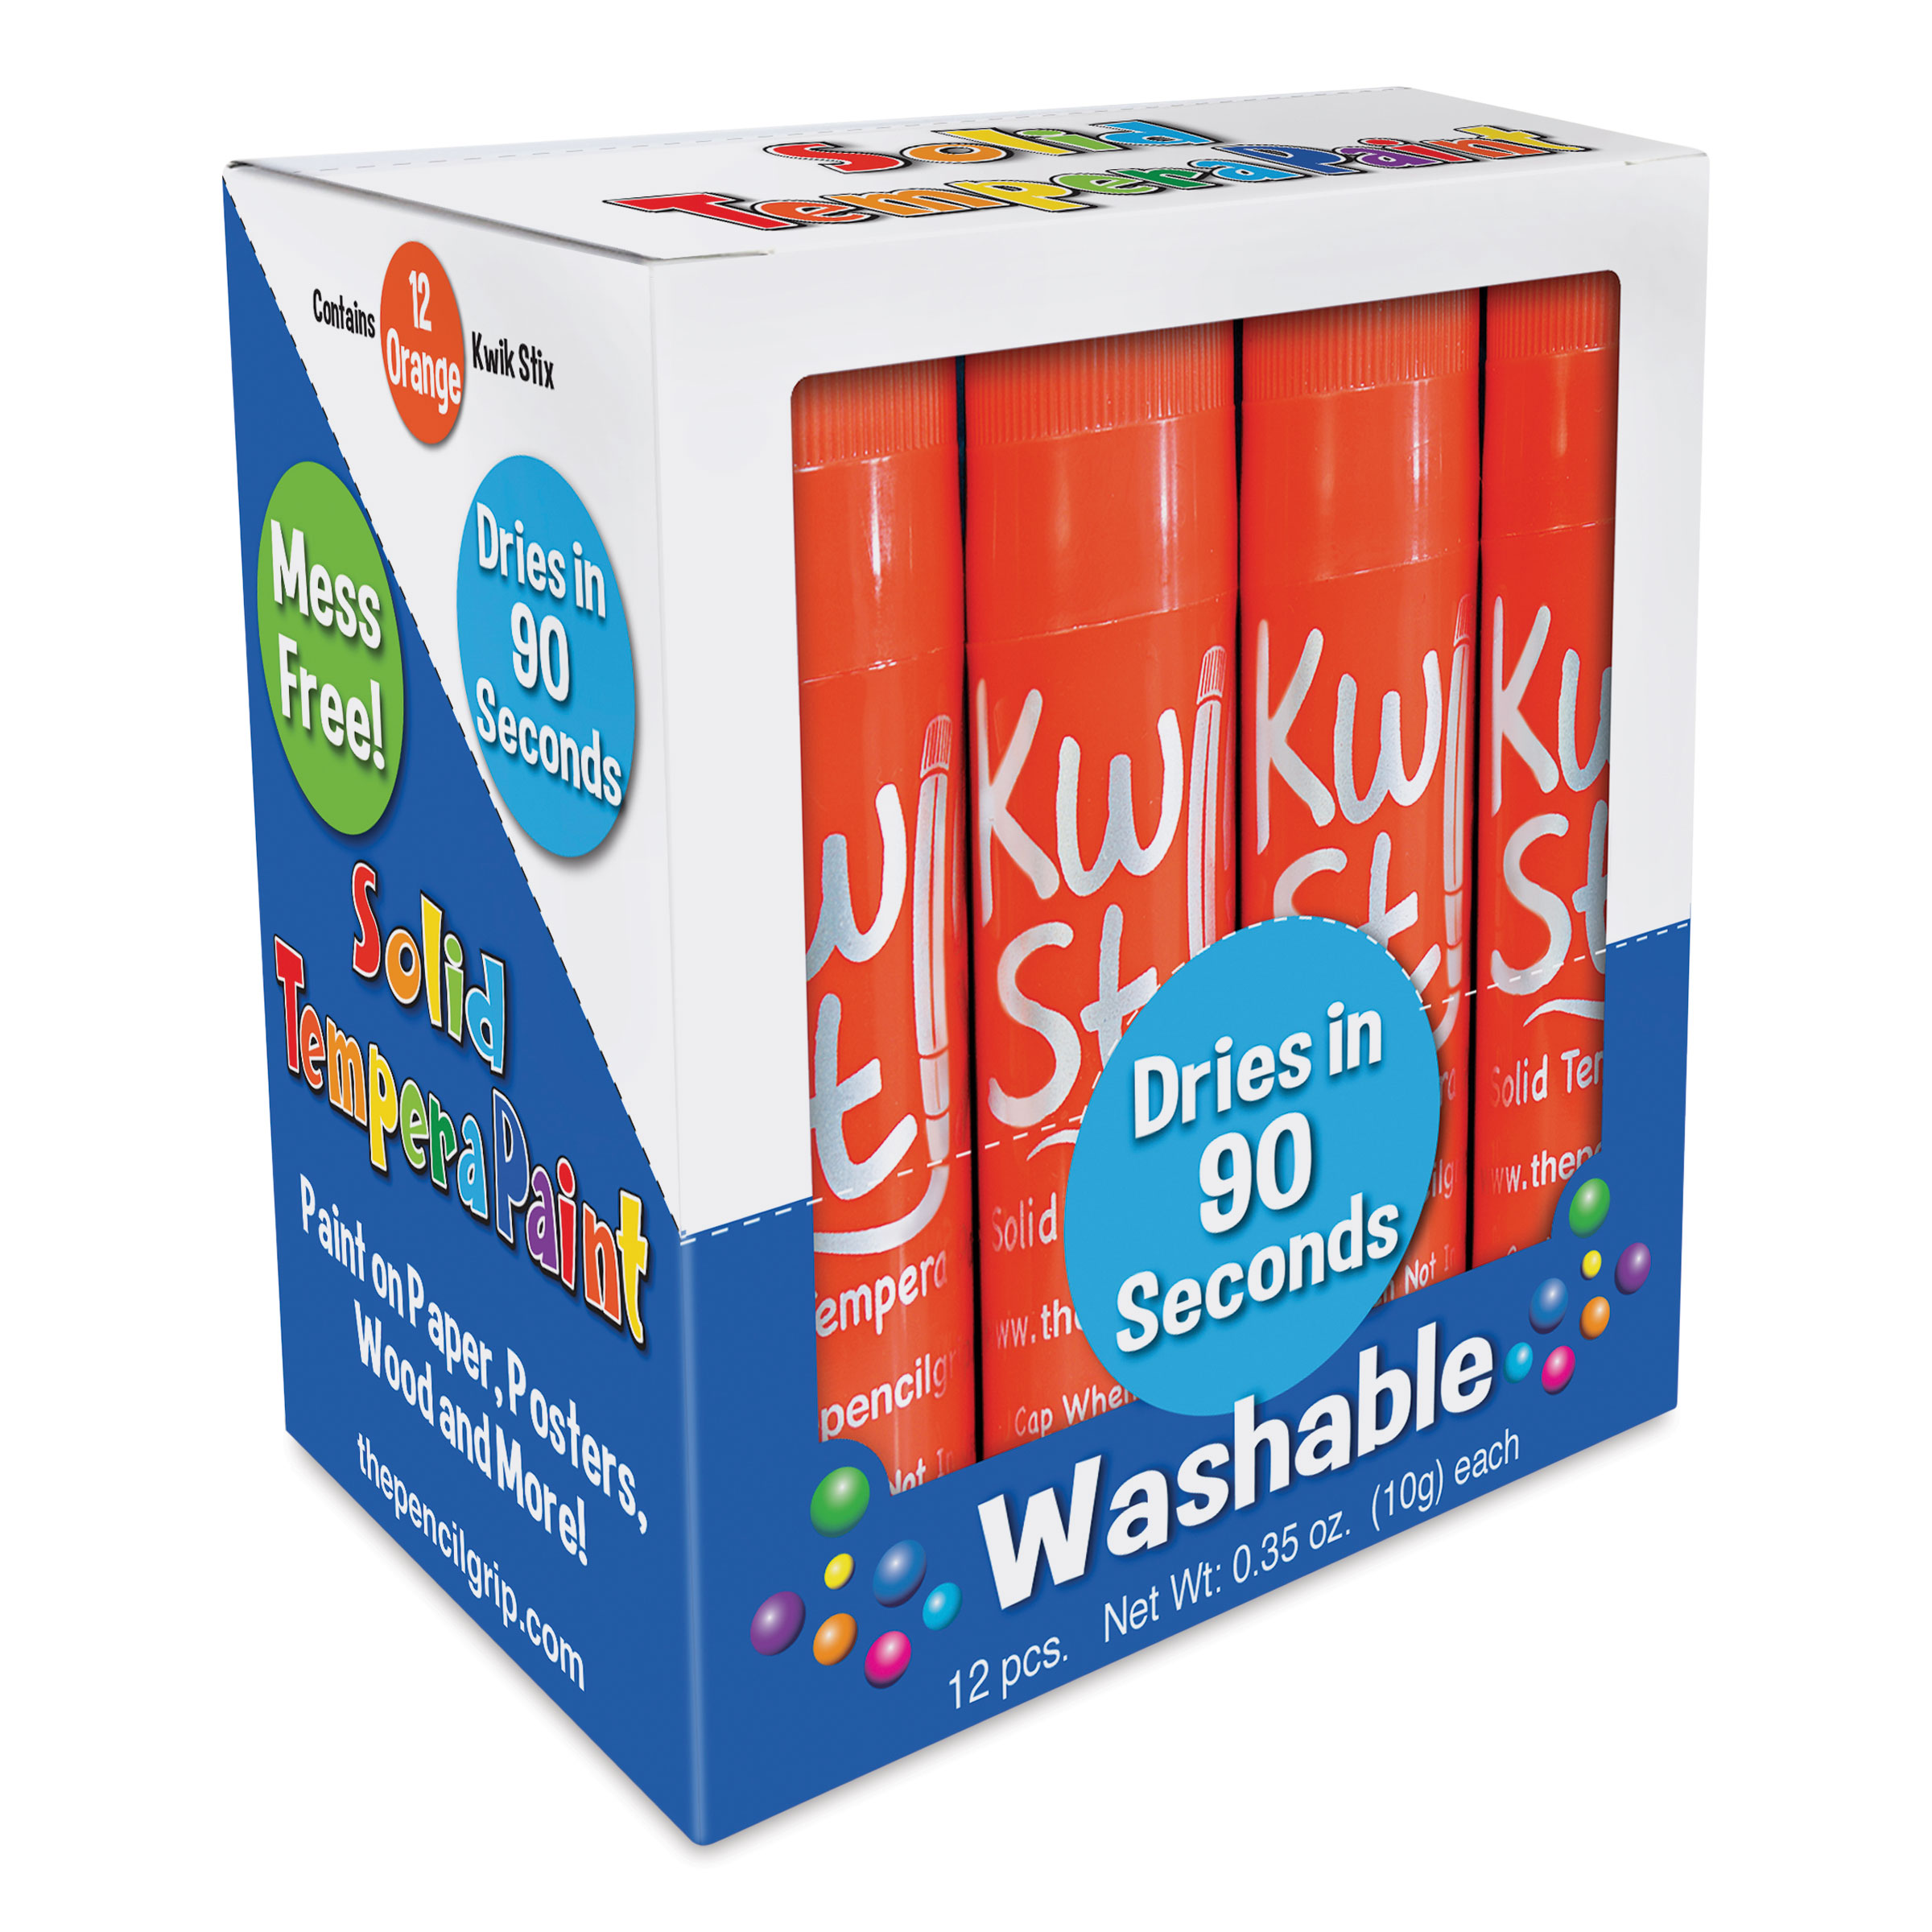 Kwik Stix™ Thin Stix™ Solid Tempera Paint - Assorted Pack of 24 Colors